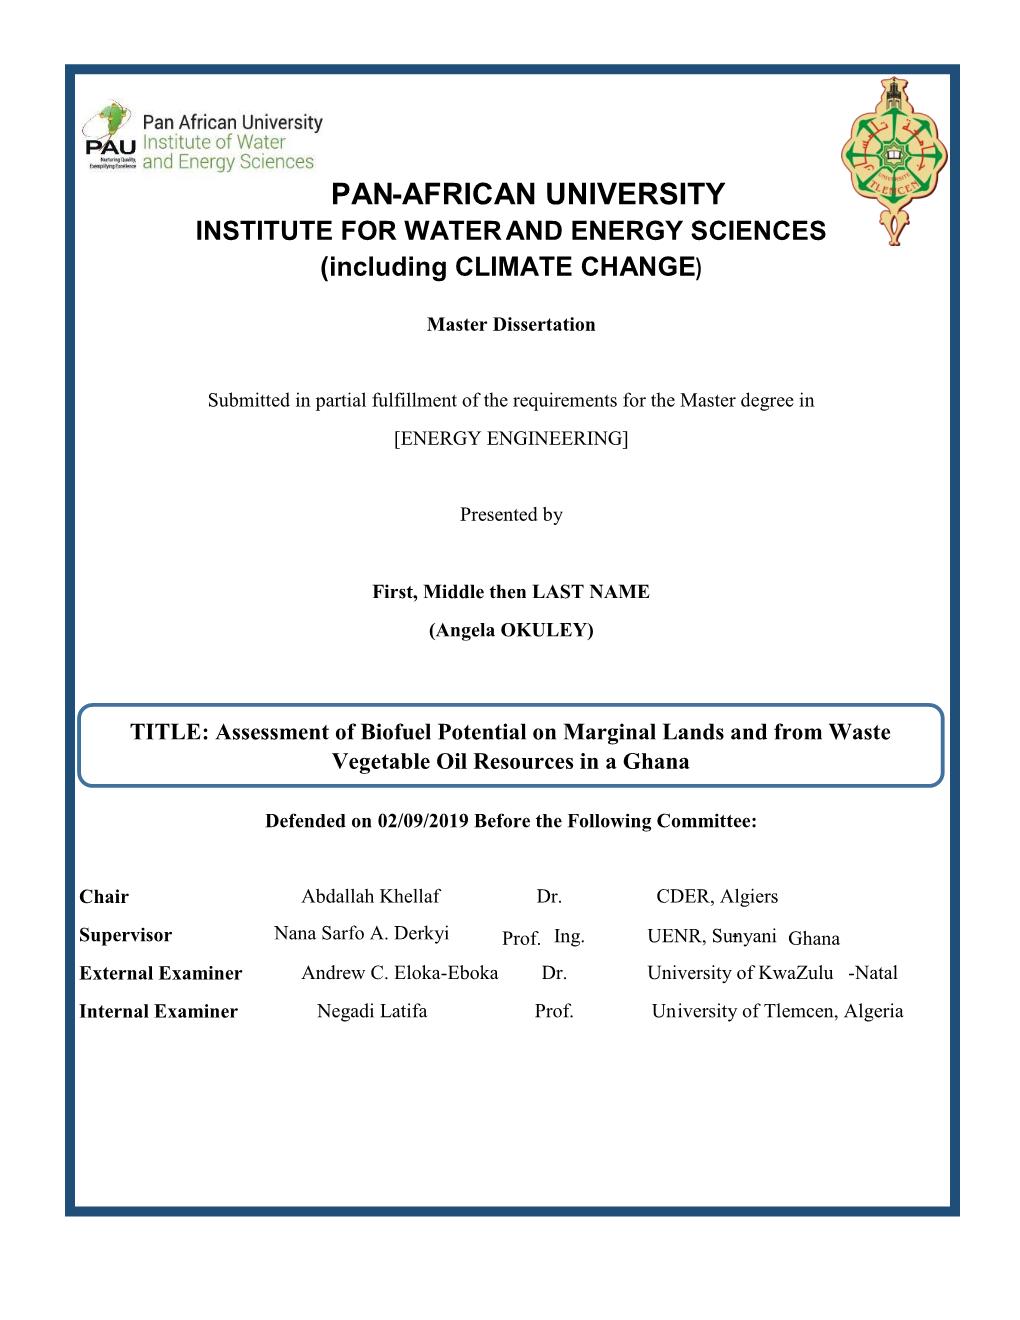 Pan-African University